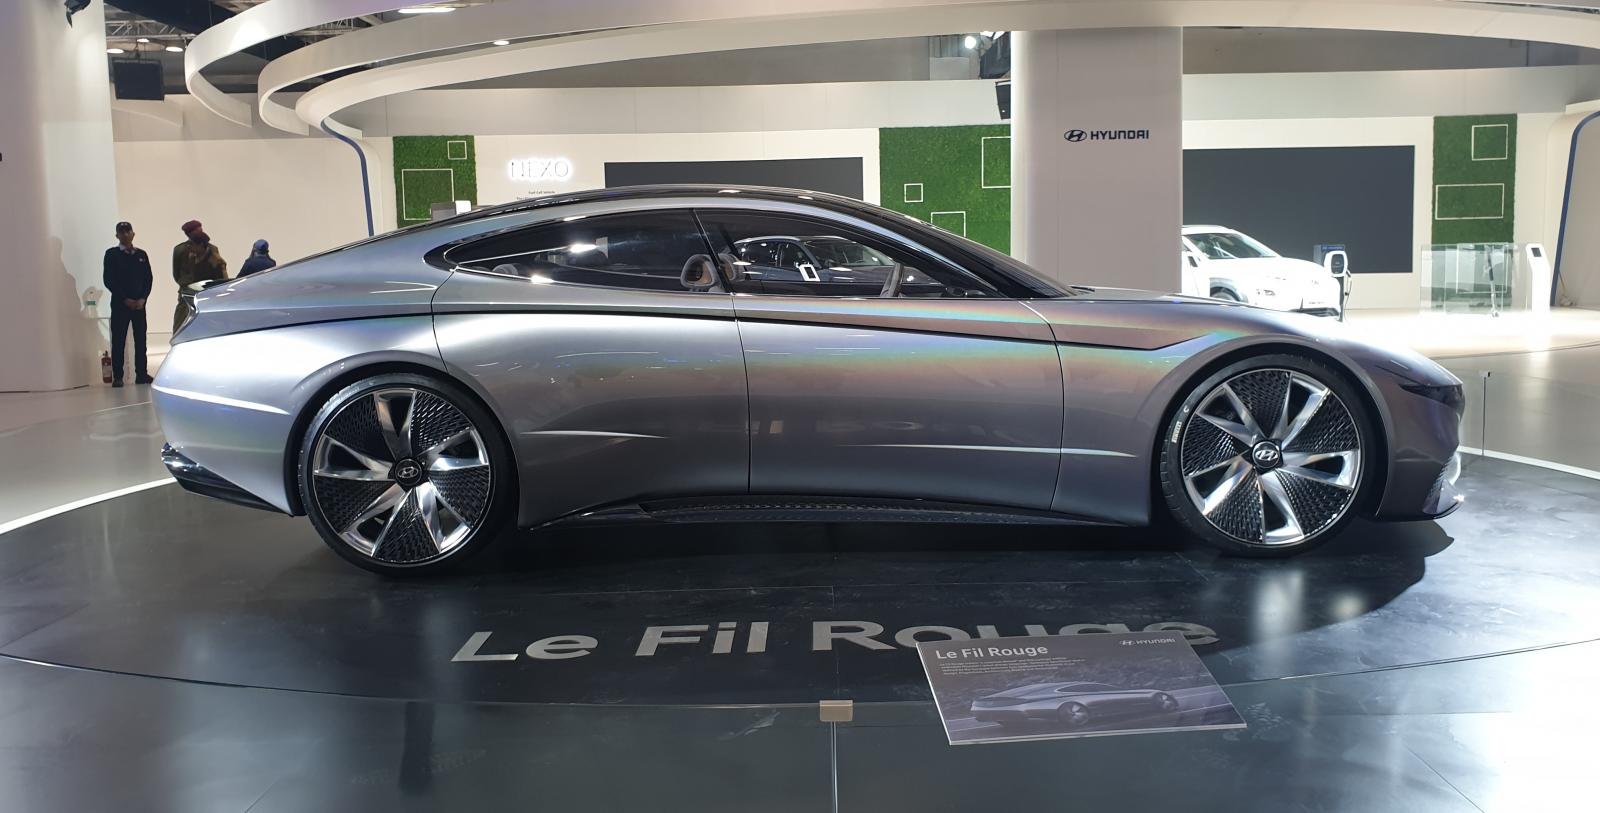 Auto Expo 2020 - Hyundai Le Fil Rouge concept